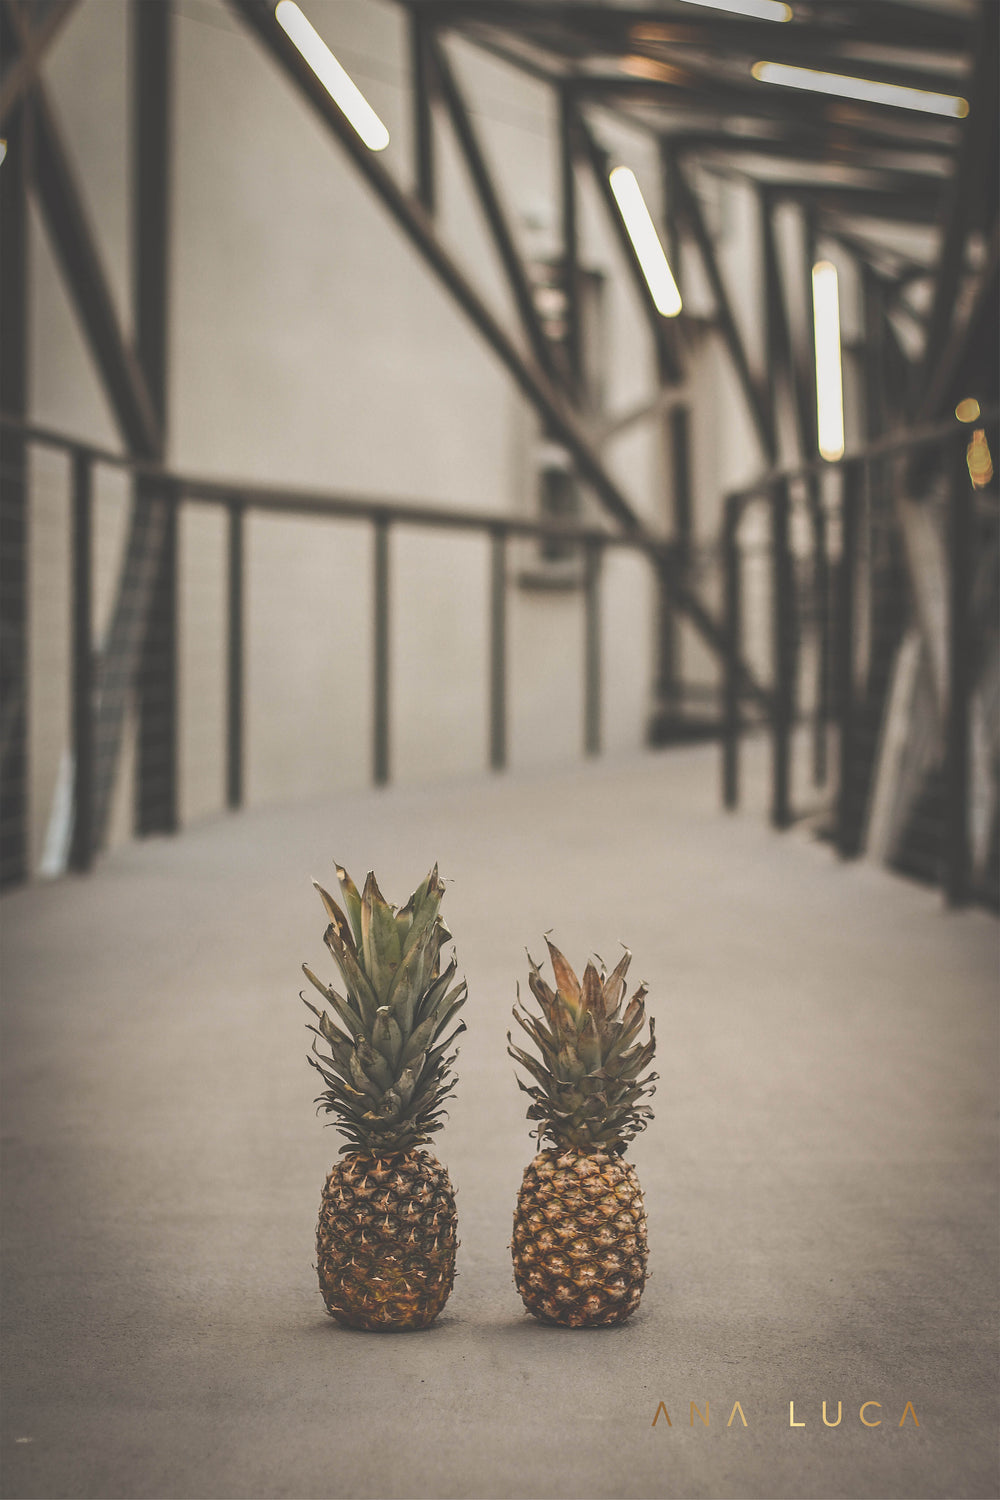 Pineapples Walking Art by Ana Luca